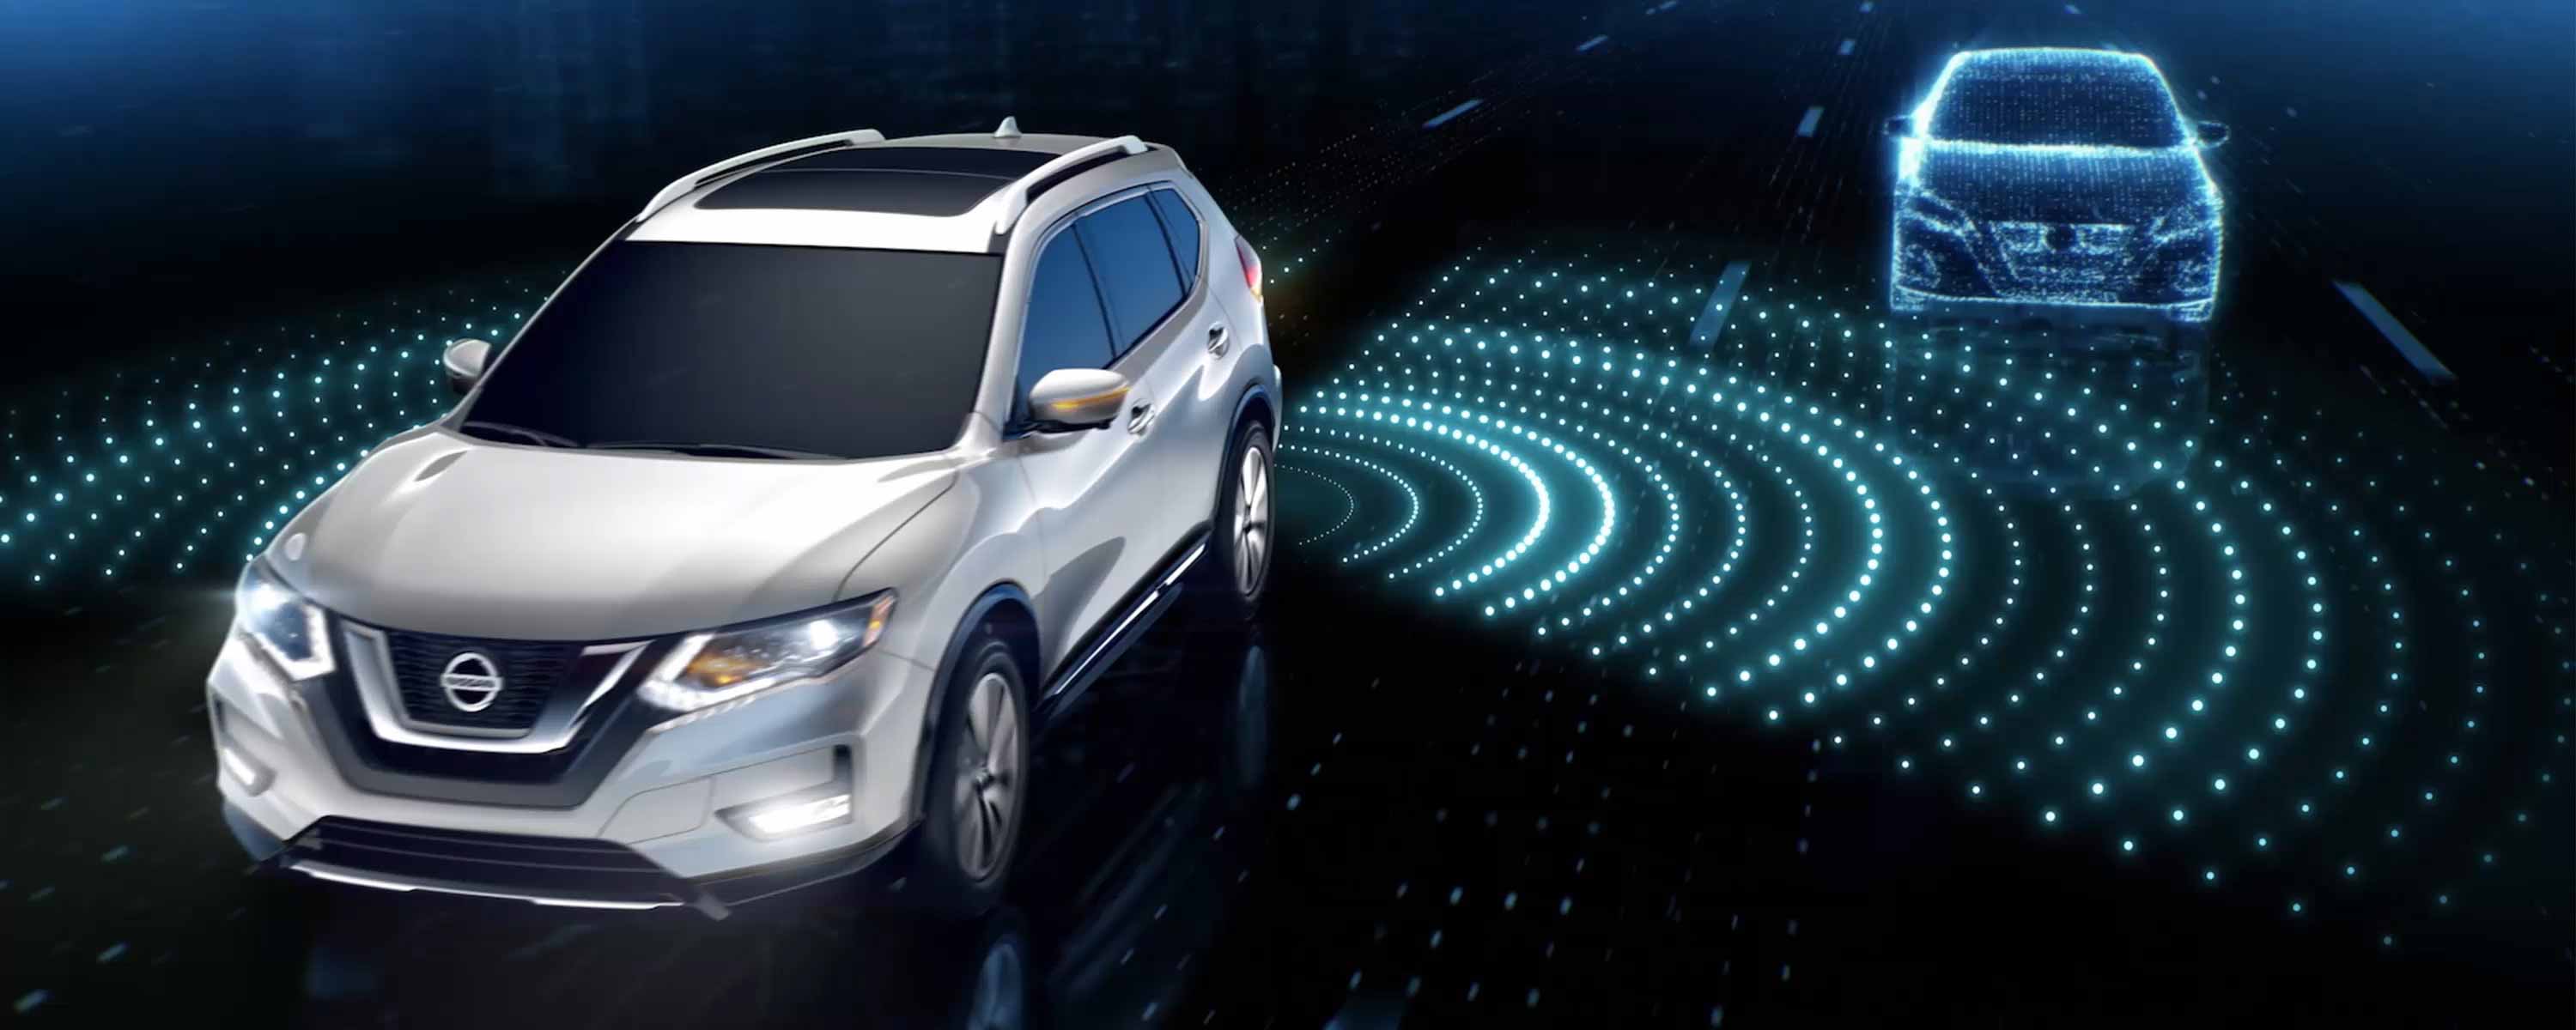 Nissan Intelligent Driving video